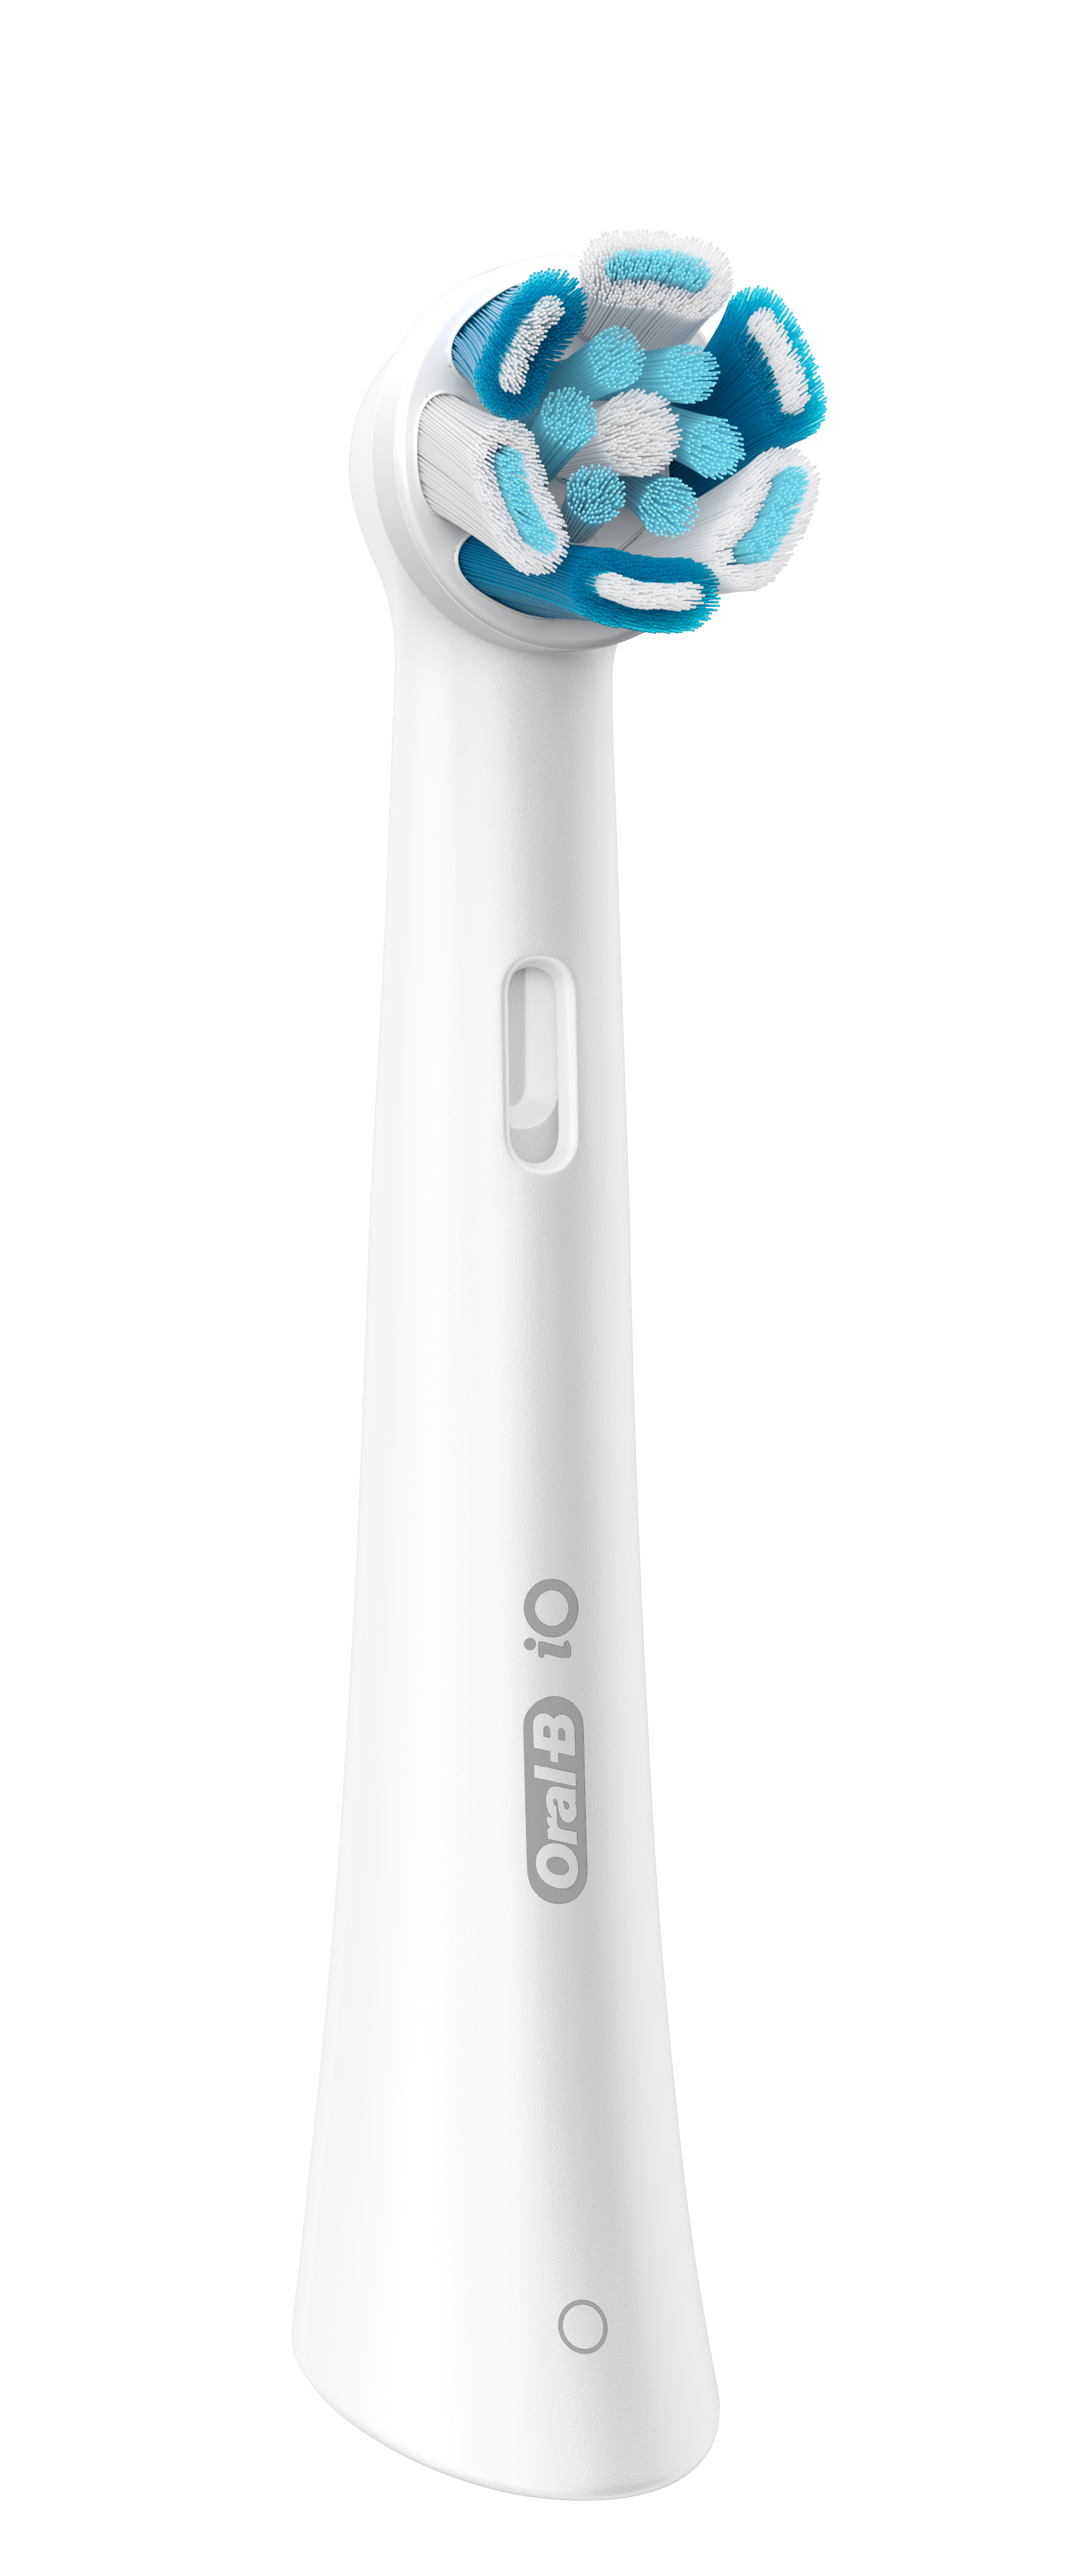 Oral-b iO Ultimate Clean 33th frame